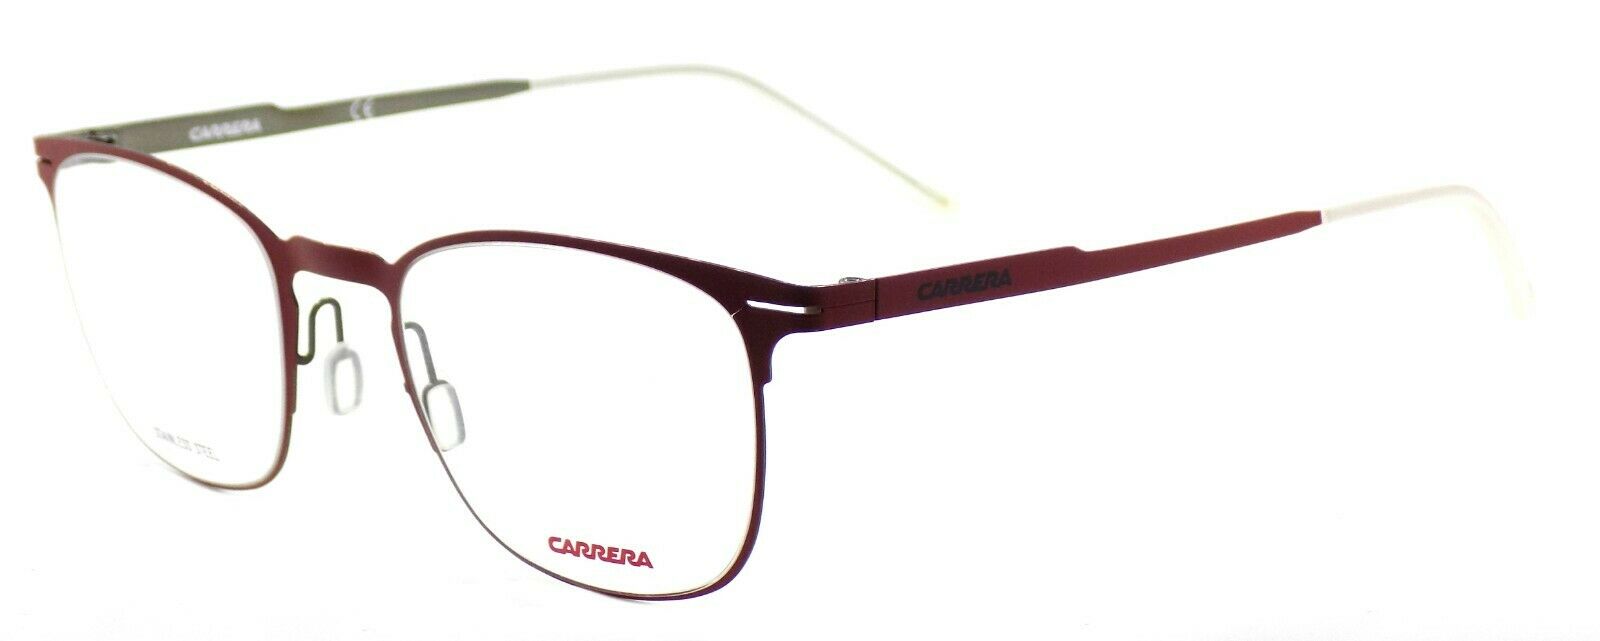 1-Carrera CA6660 VZ4 Men's Eyeglasses Frames 50-22-145 Matte Red + CASE-827886640843-IKSpecs